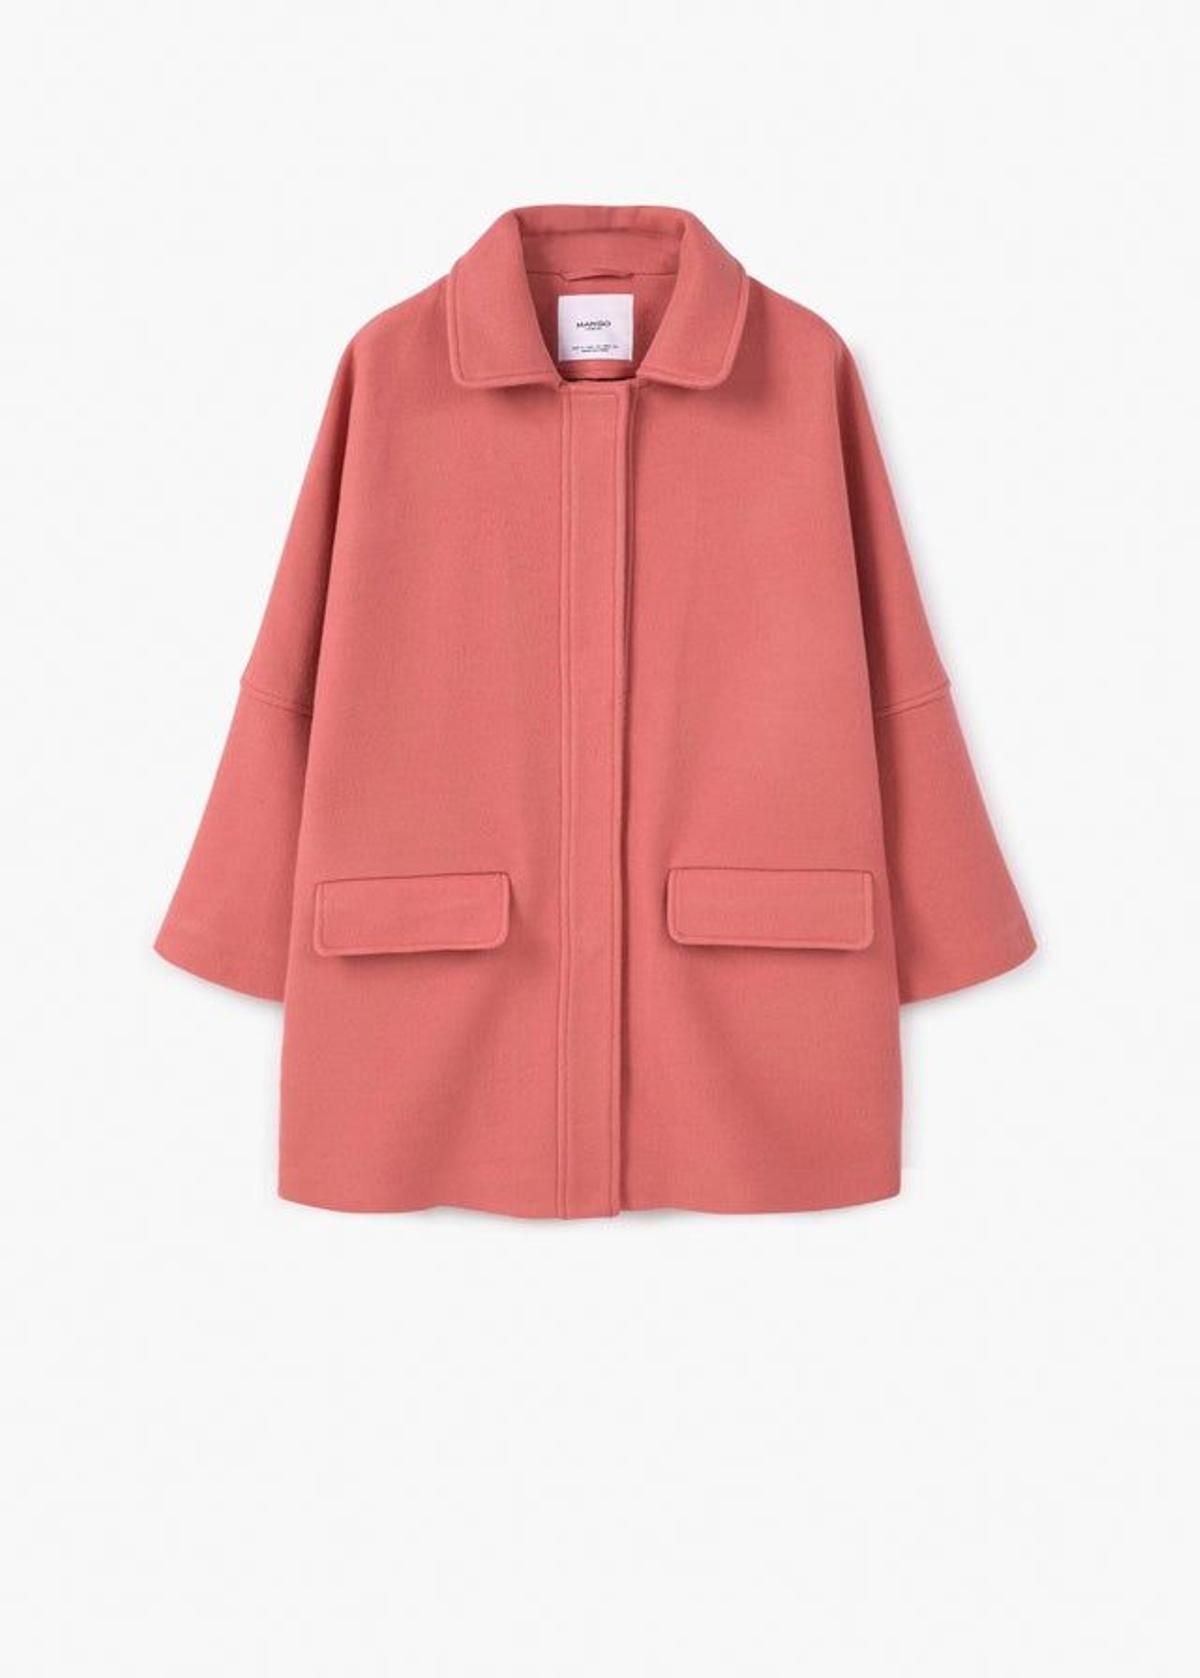 Abrigo de lana rosa de Mango (Precio: 39,99 euros)